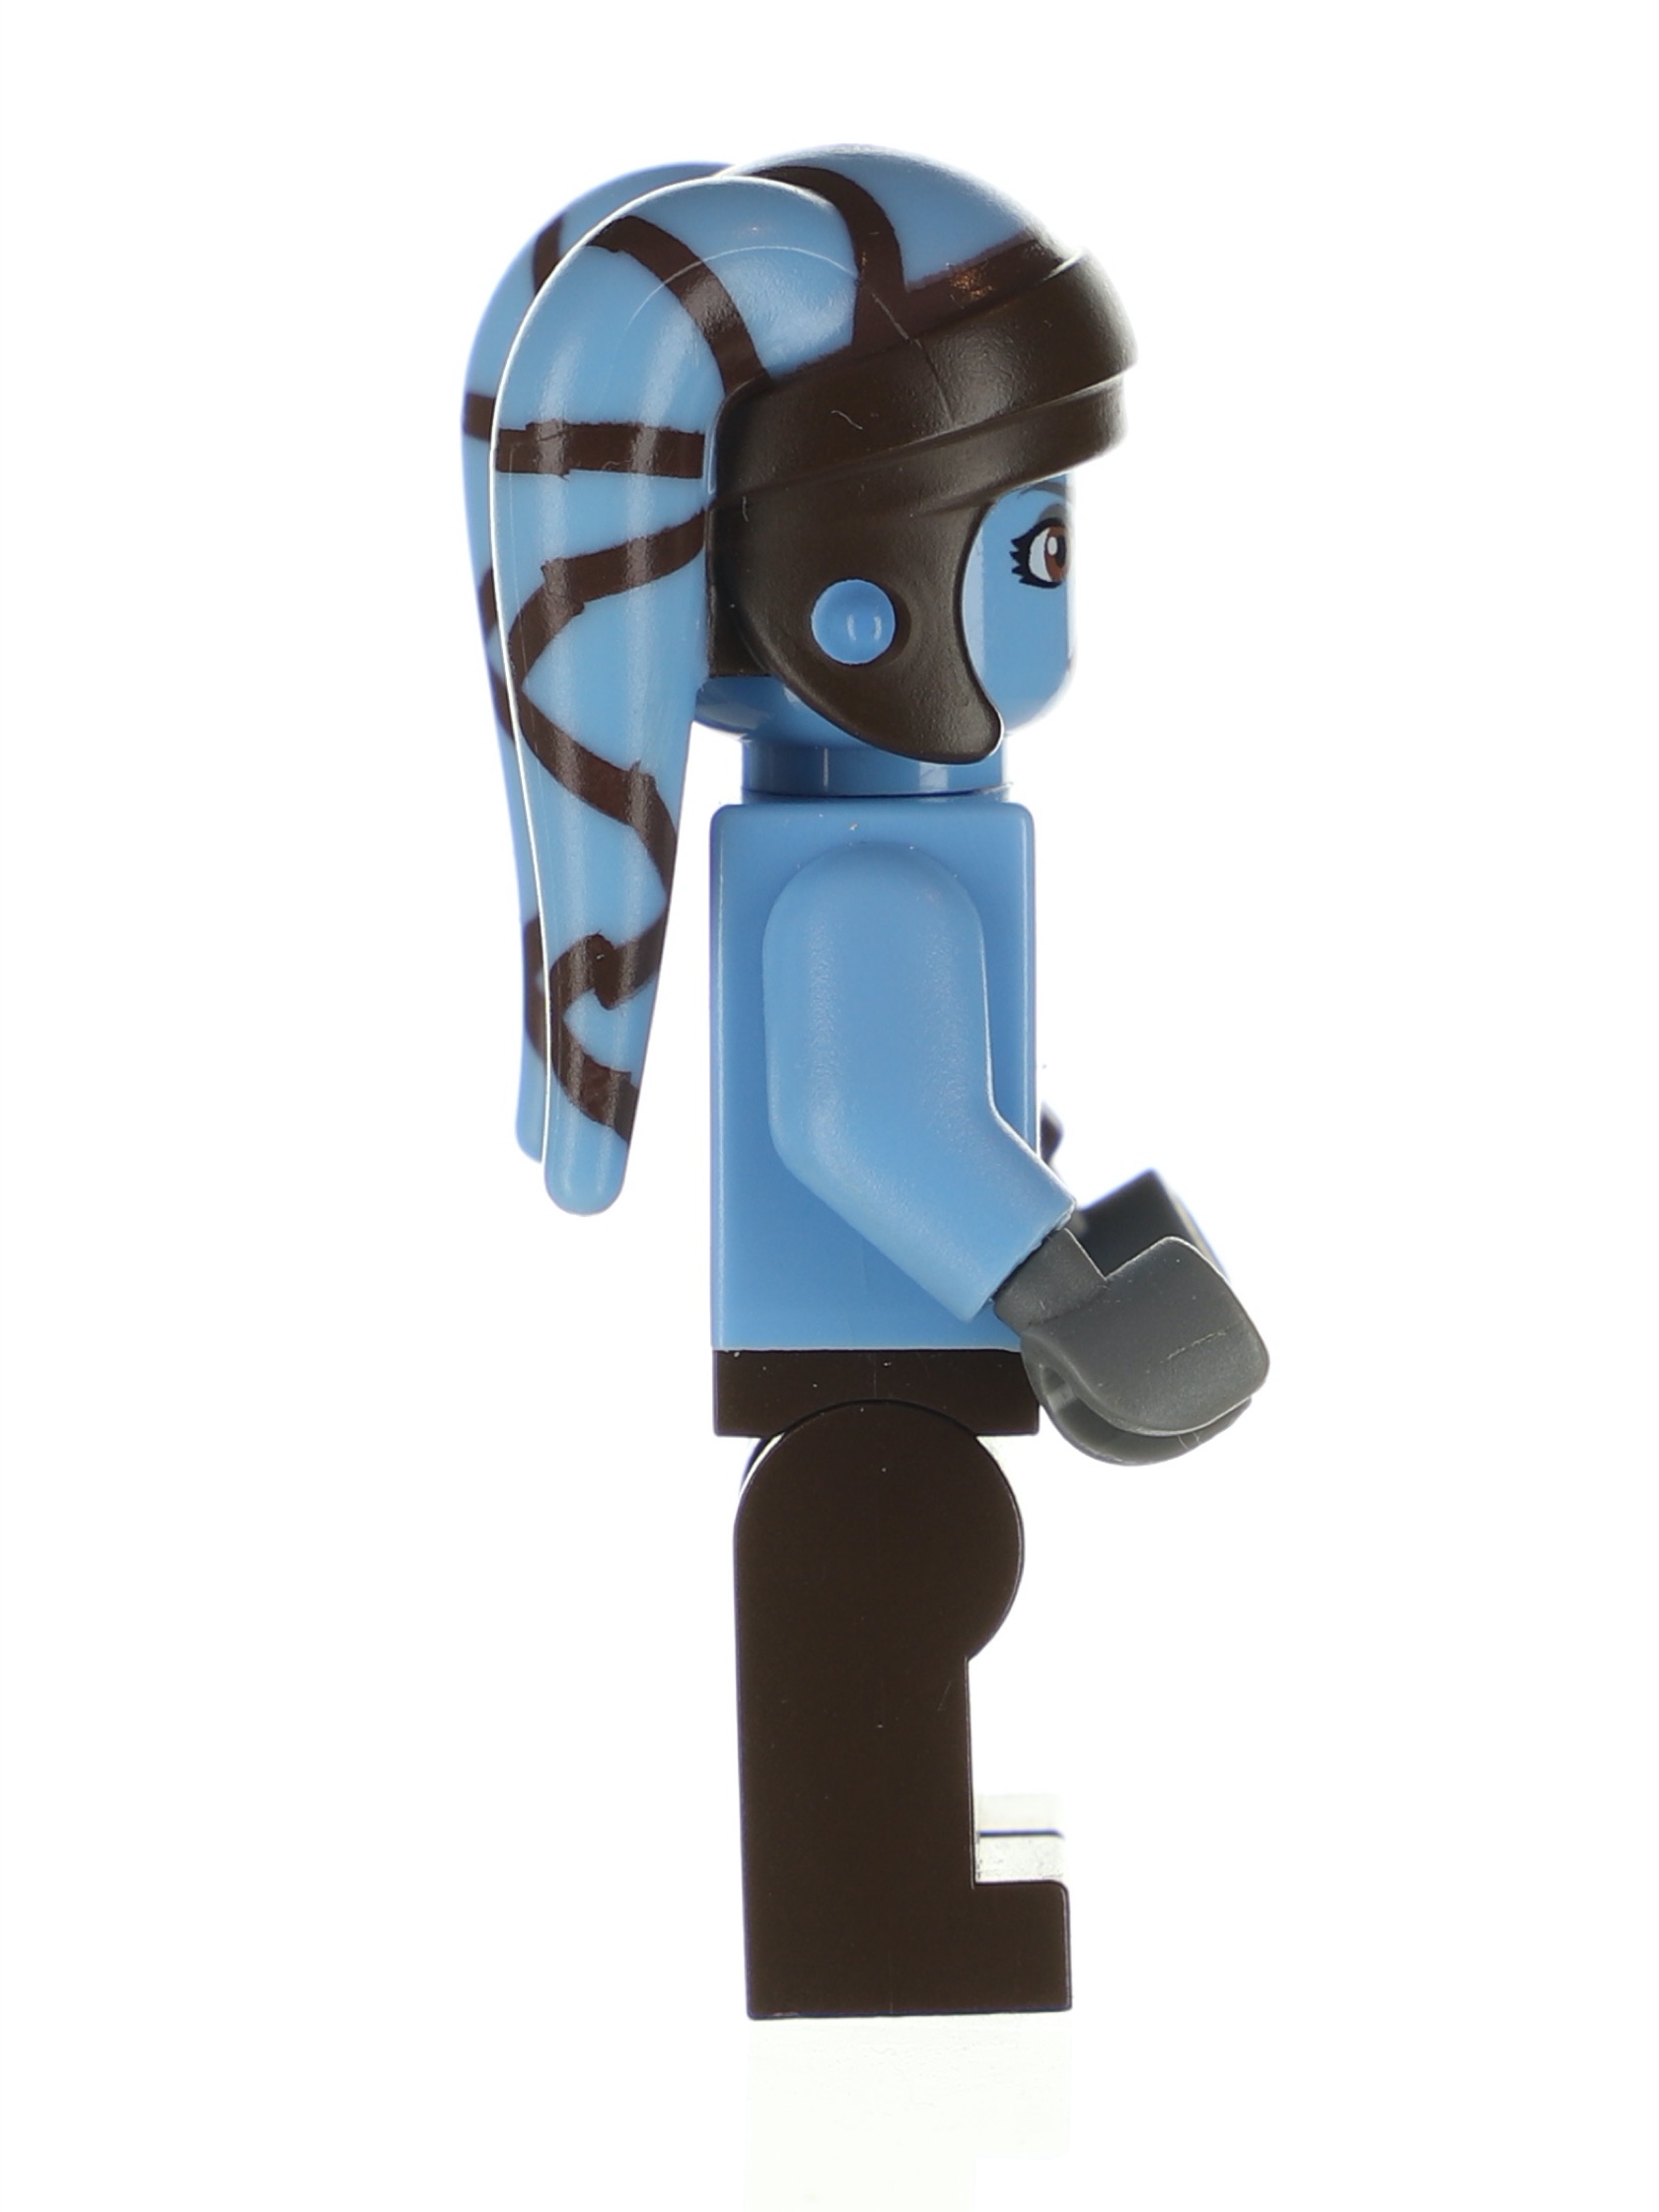 LEGO Star Wars Aayla Secura Clone Wars sw0284 From Set 8098